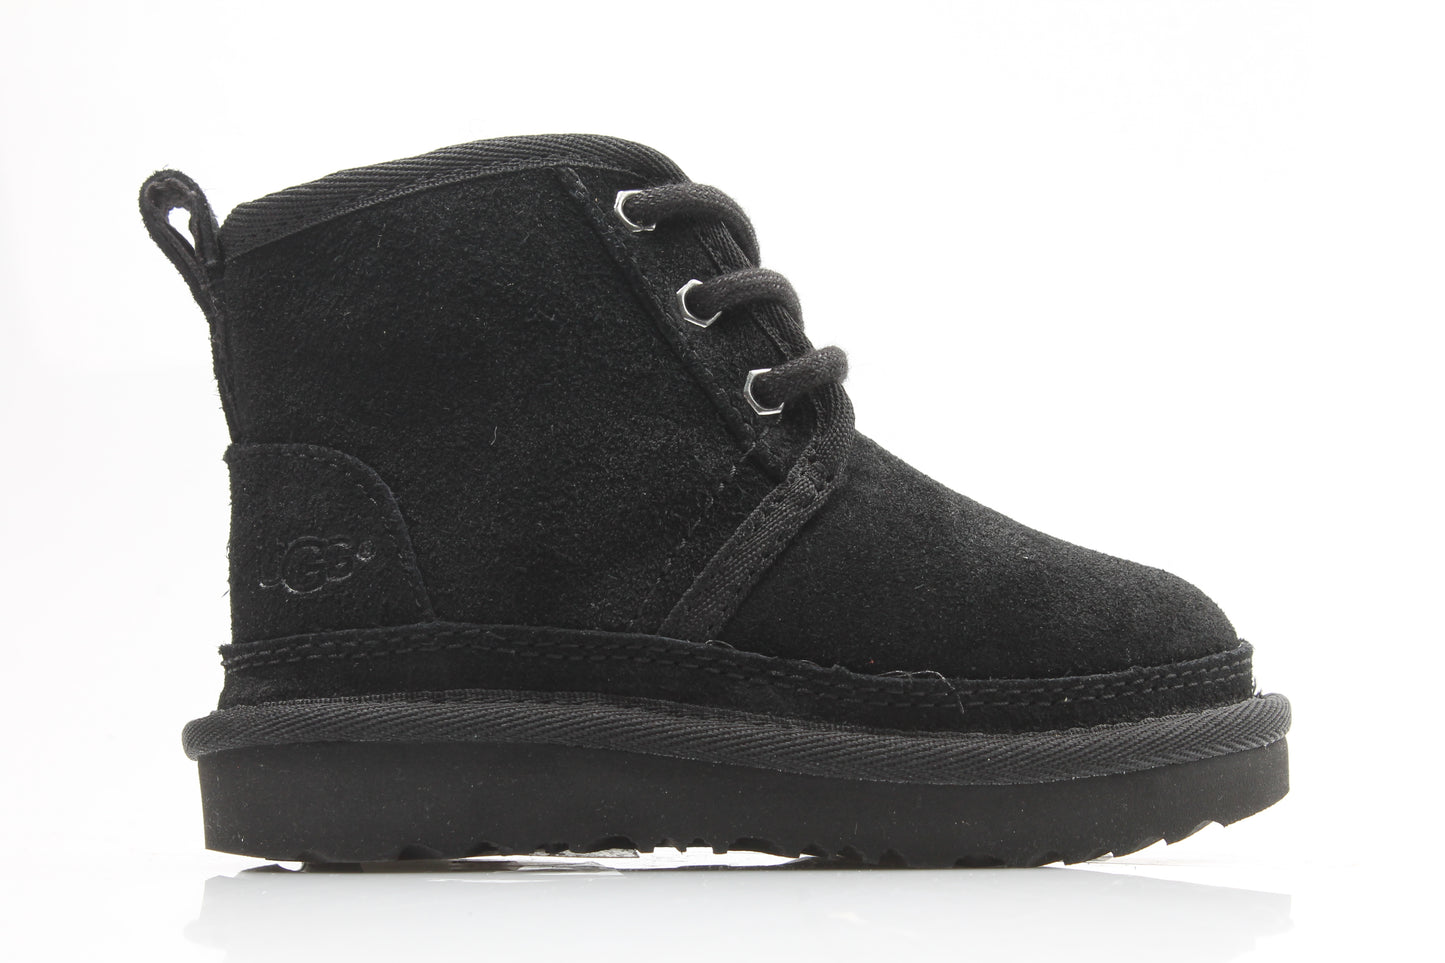 UGG Australia Neumel II Black Toddler Chukka boots 1017320T-BLK